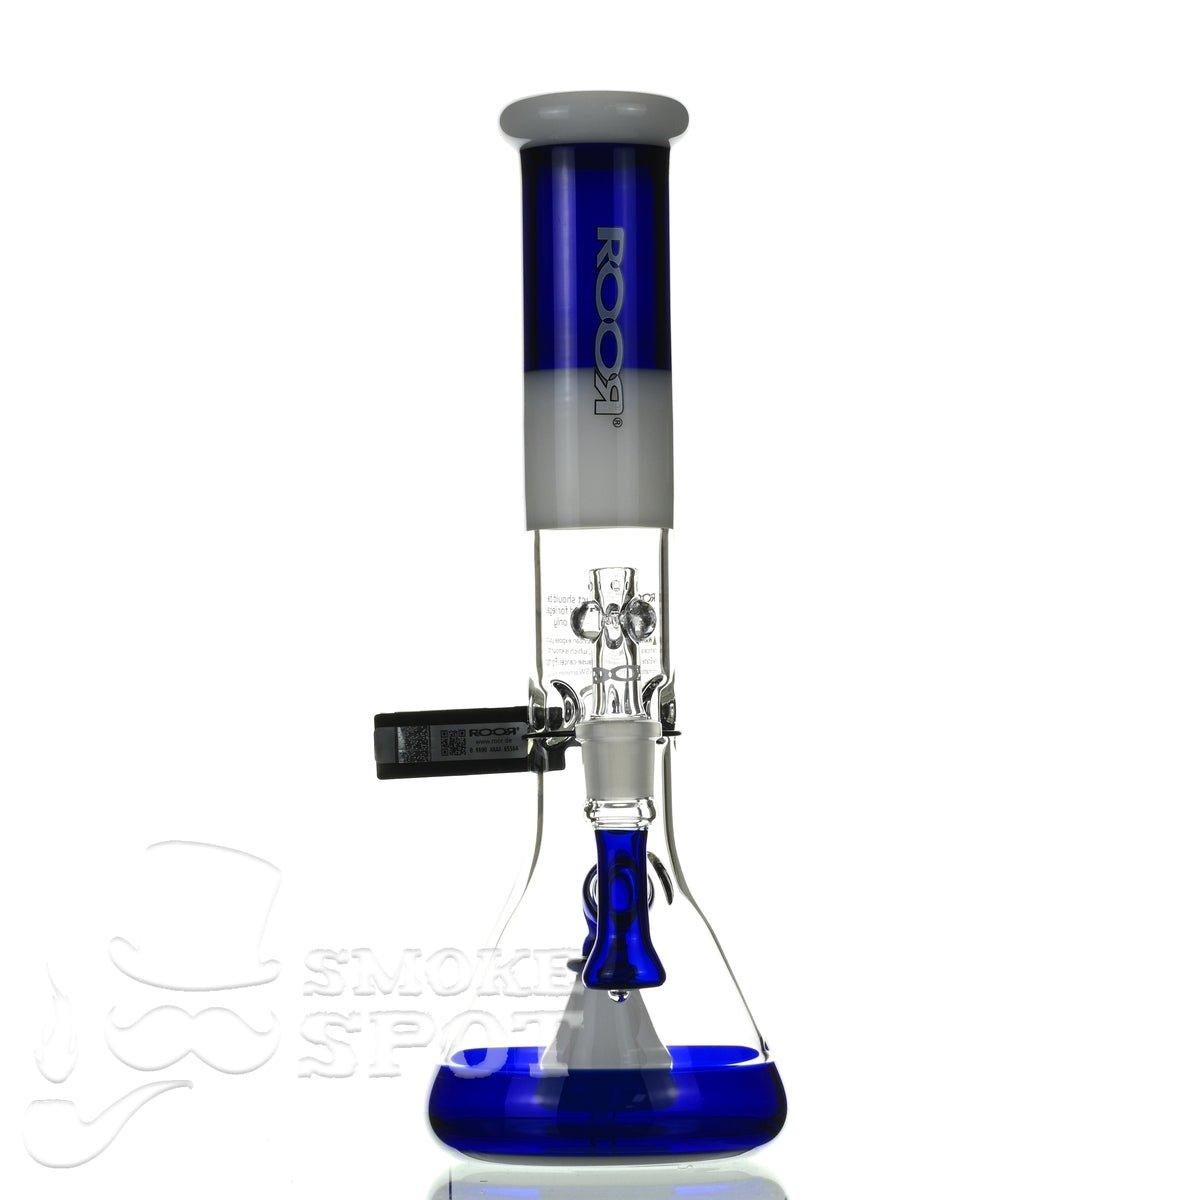 ROOR tech glass beaker 14 inch 50 x 5 blue & white - Smoke Spot Smoke Shop